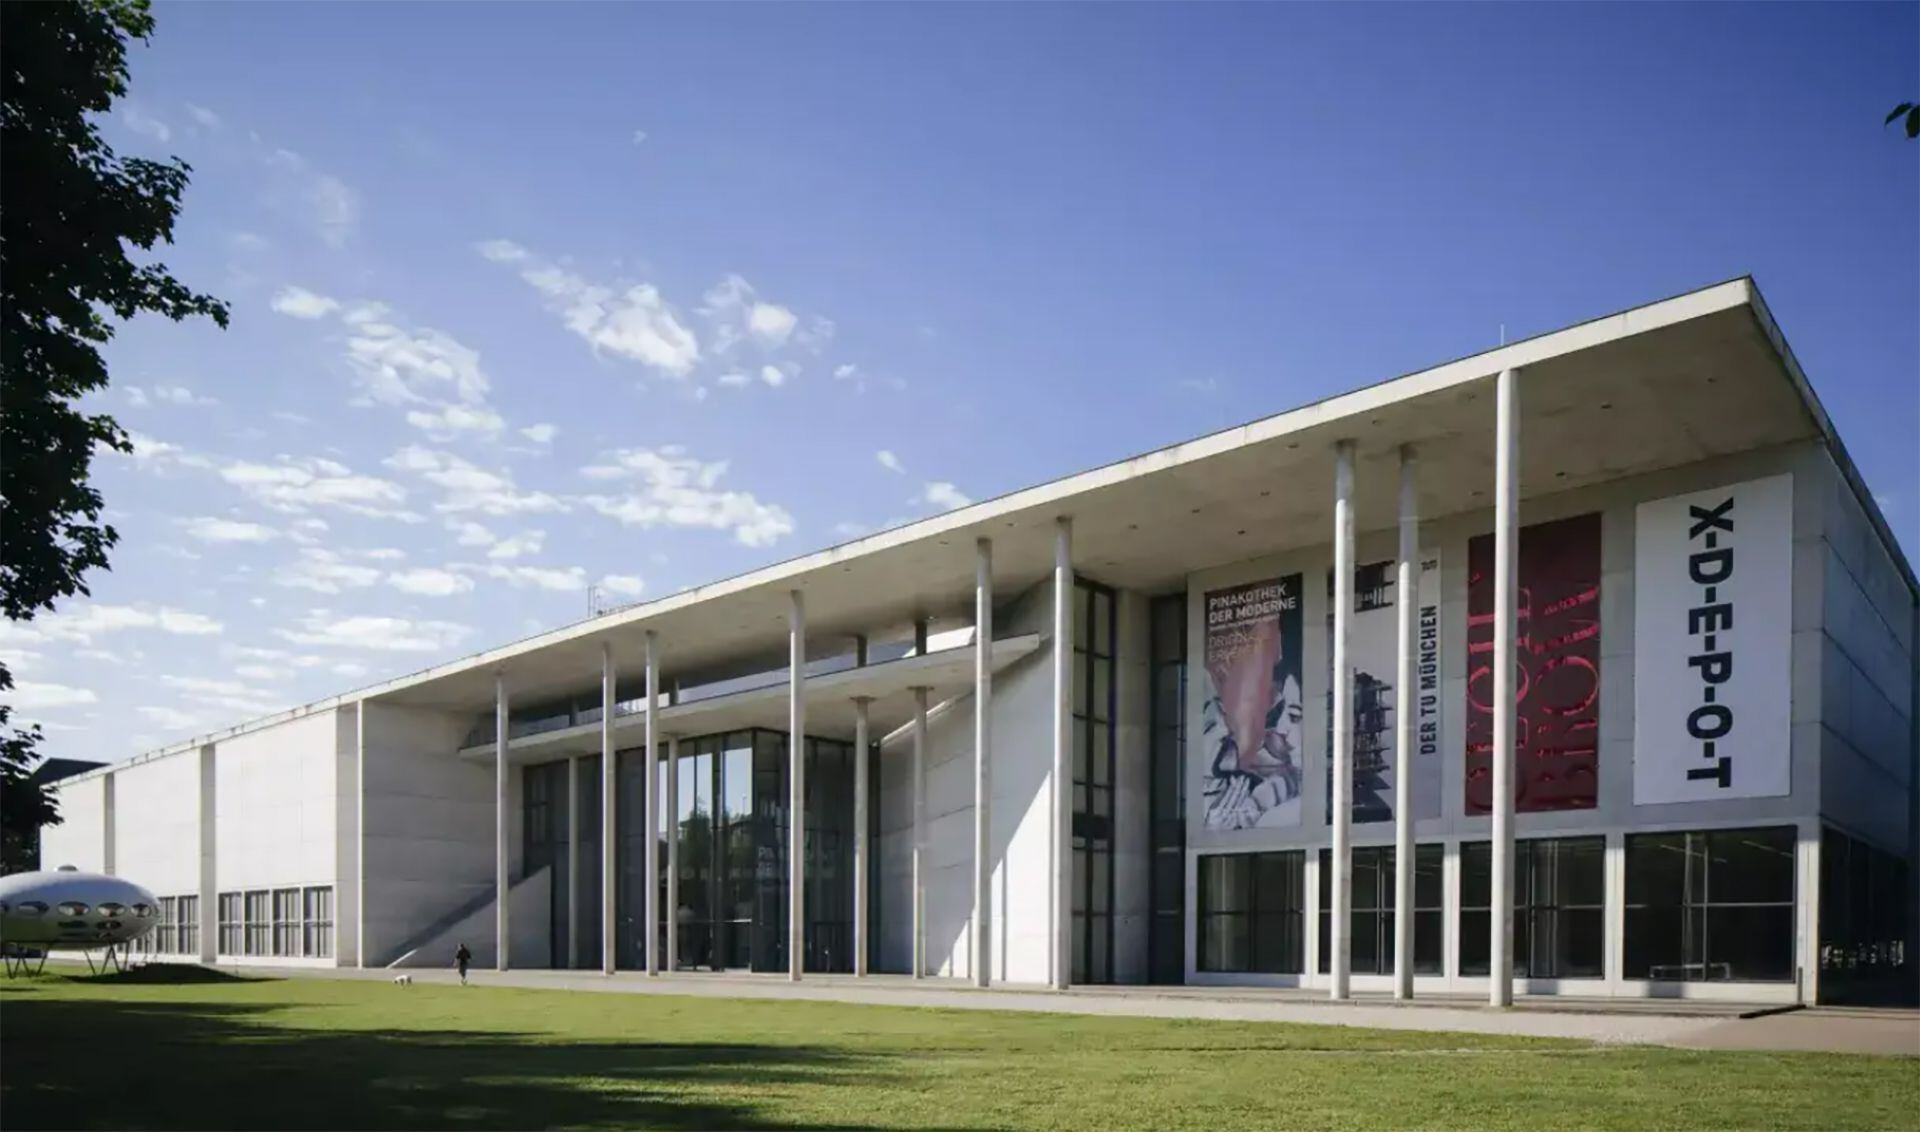 Pinakothek der Moderne Munich